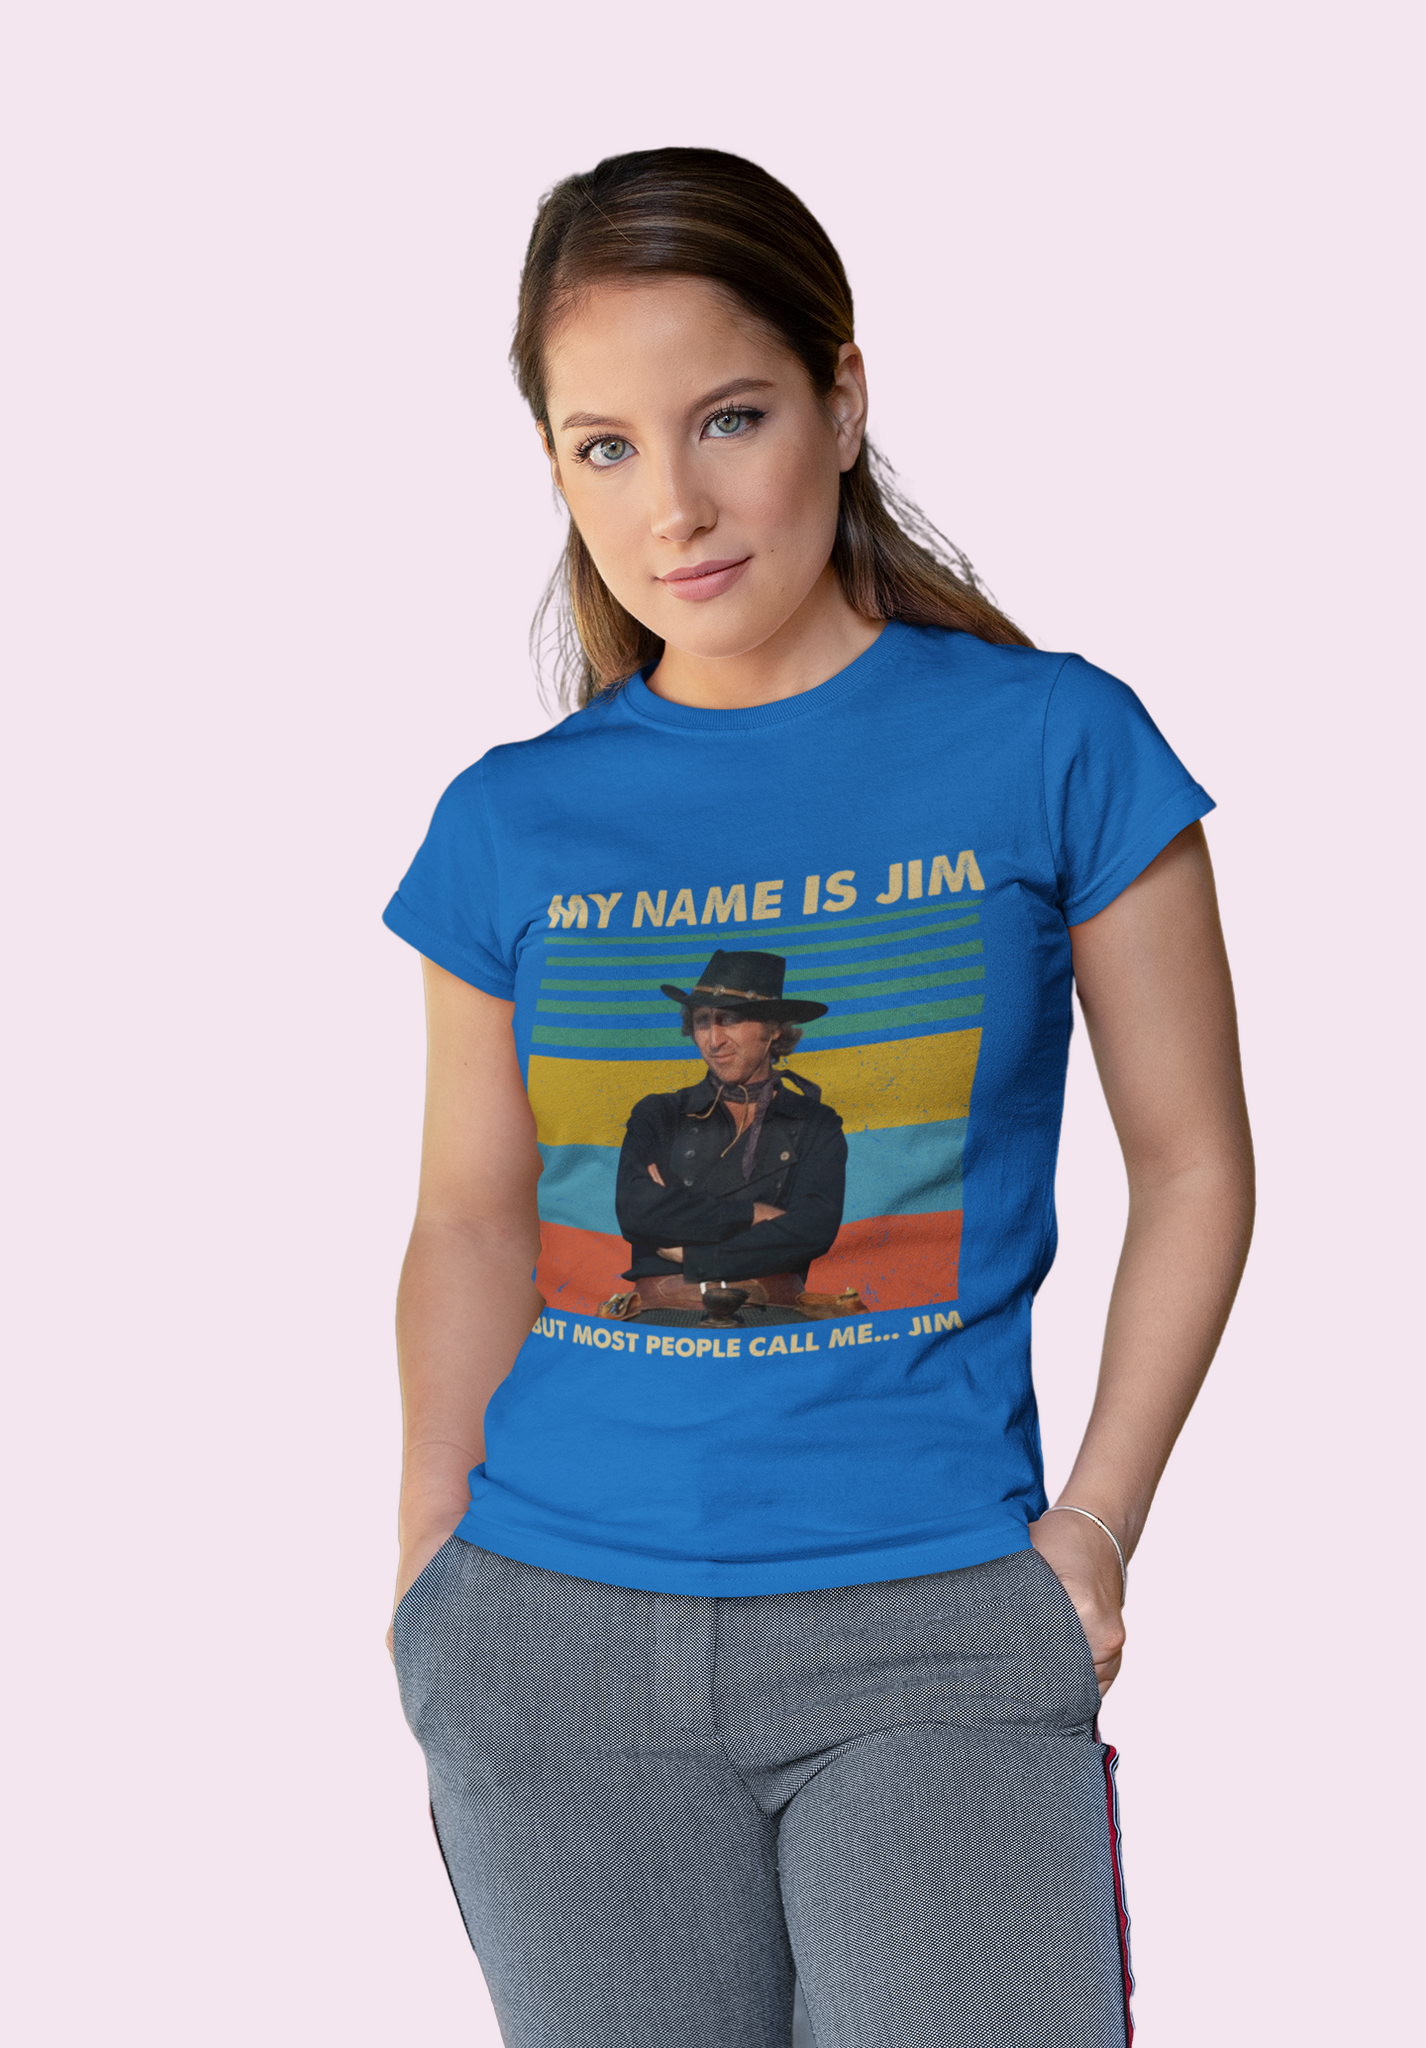 Blazing Saddles Movie T Shirt, Jim T Shirt, My Name Is Jim But Most People Call Me Jim Tshirt